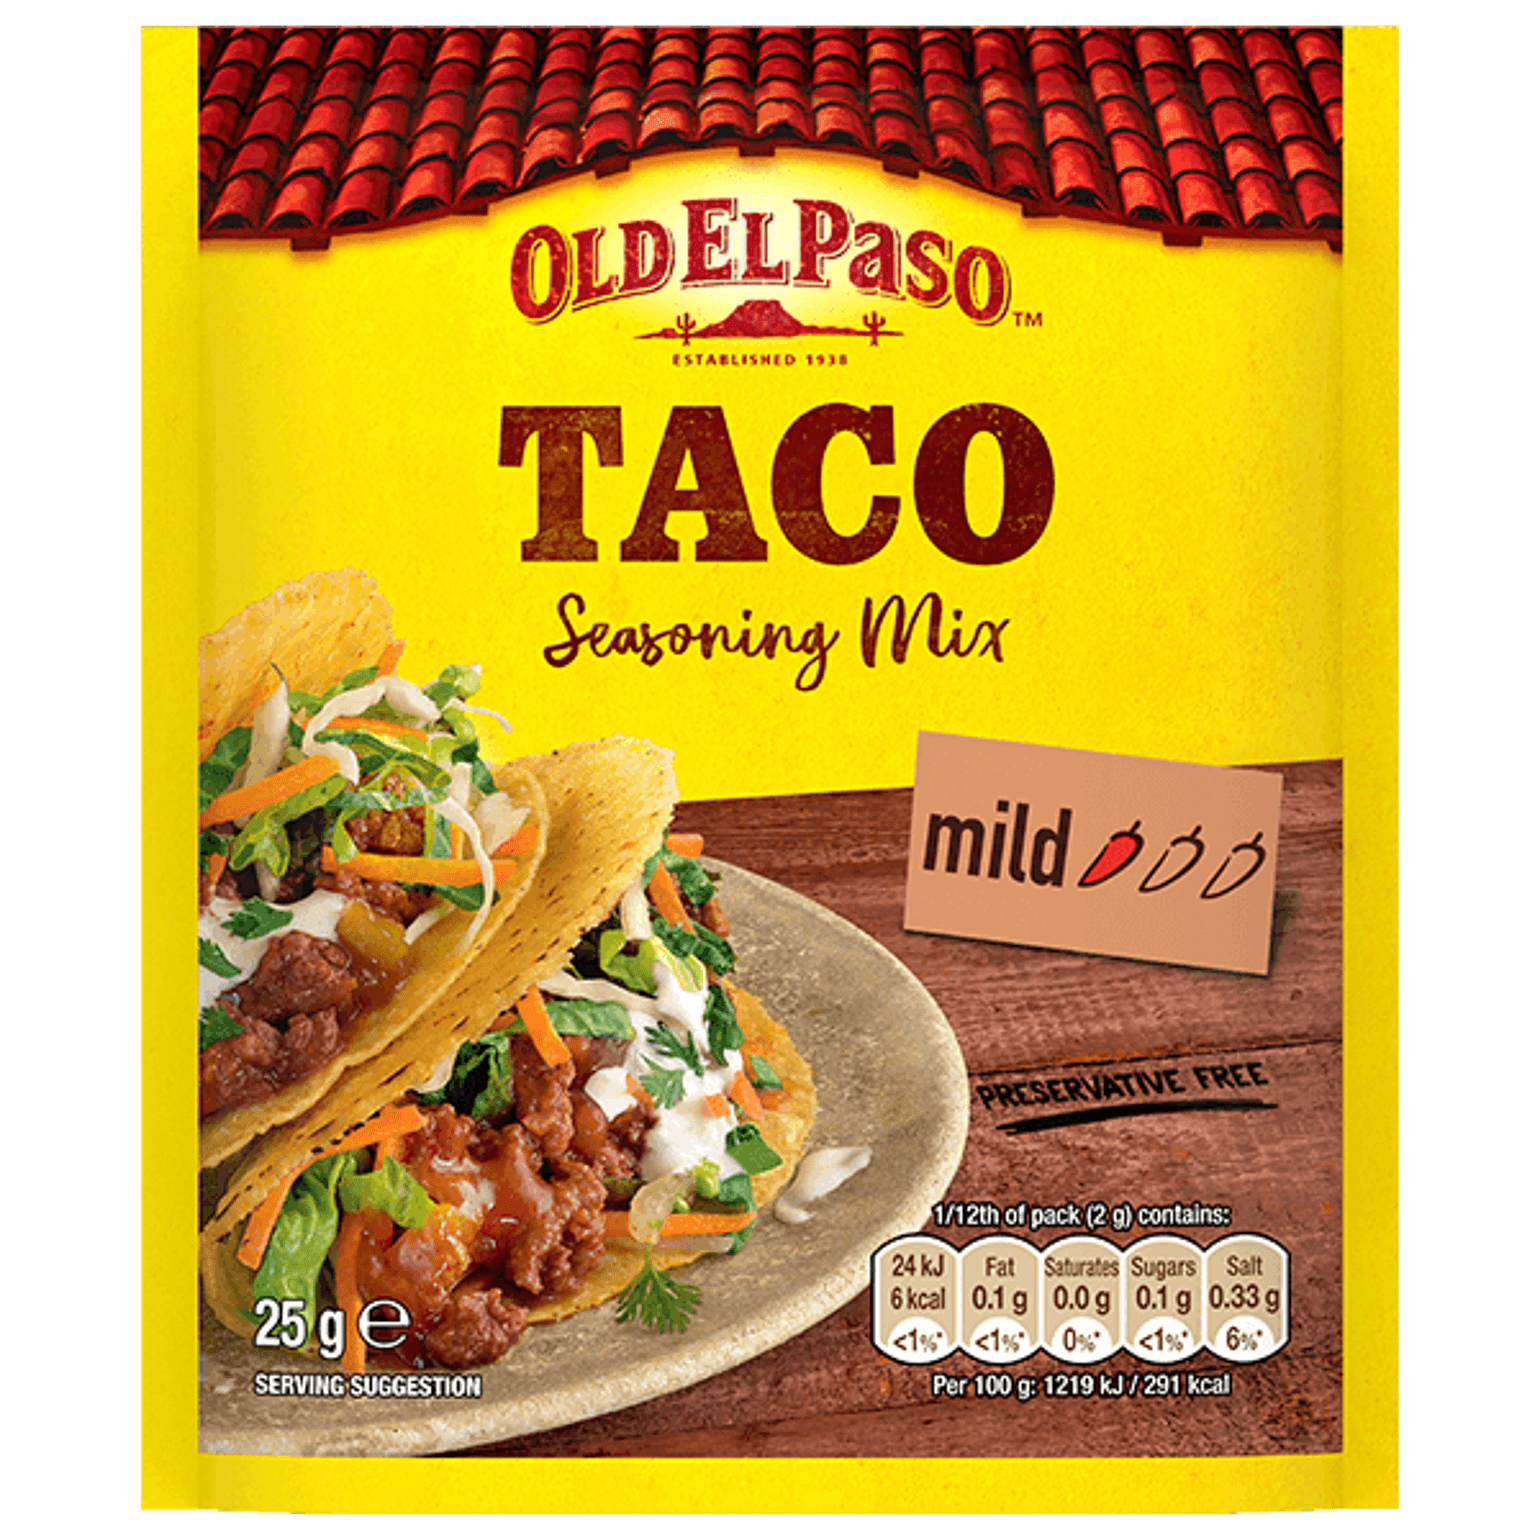 pack of Old El Paso's taco seasoning mix (25g)